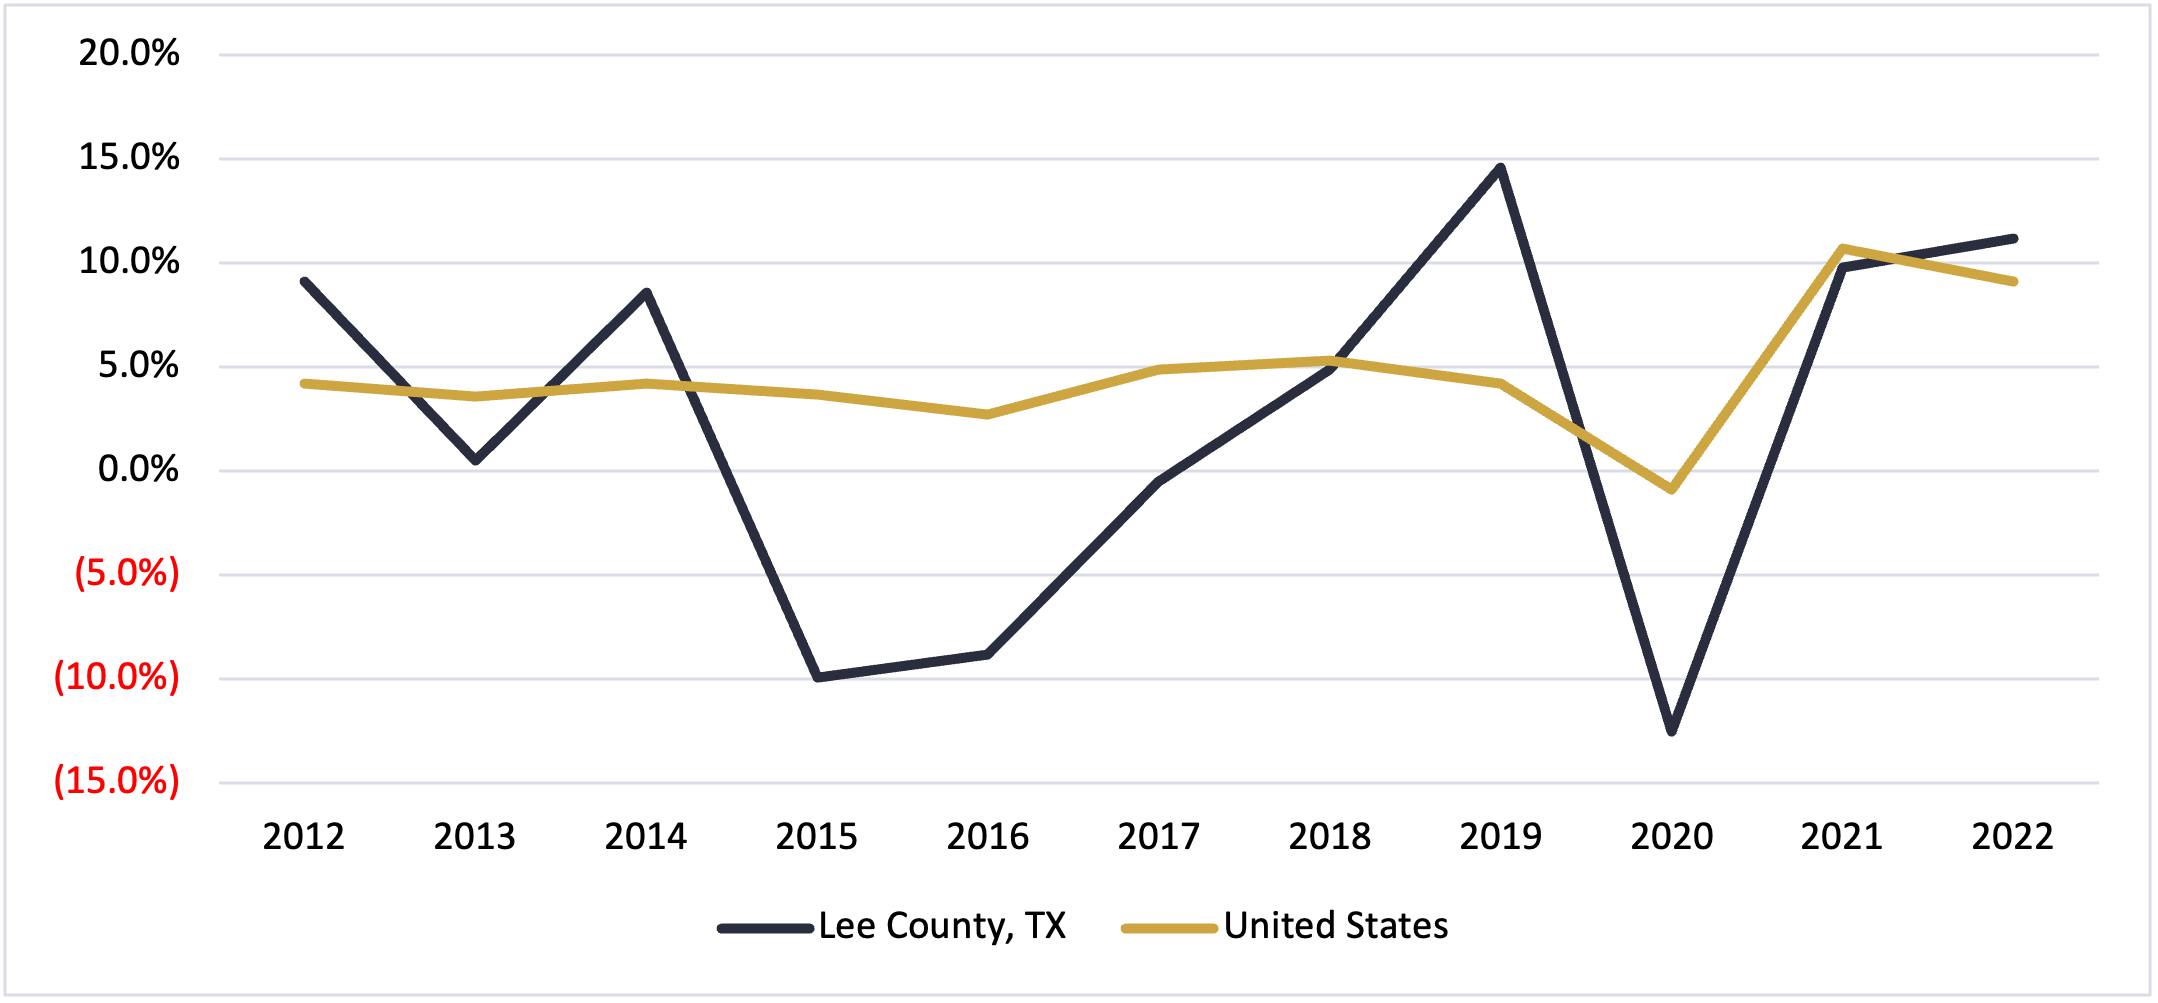 Lee County Texas GRP Growth 2022